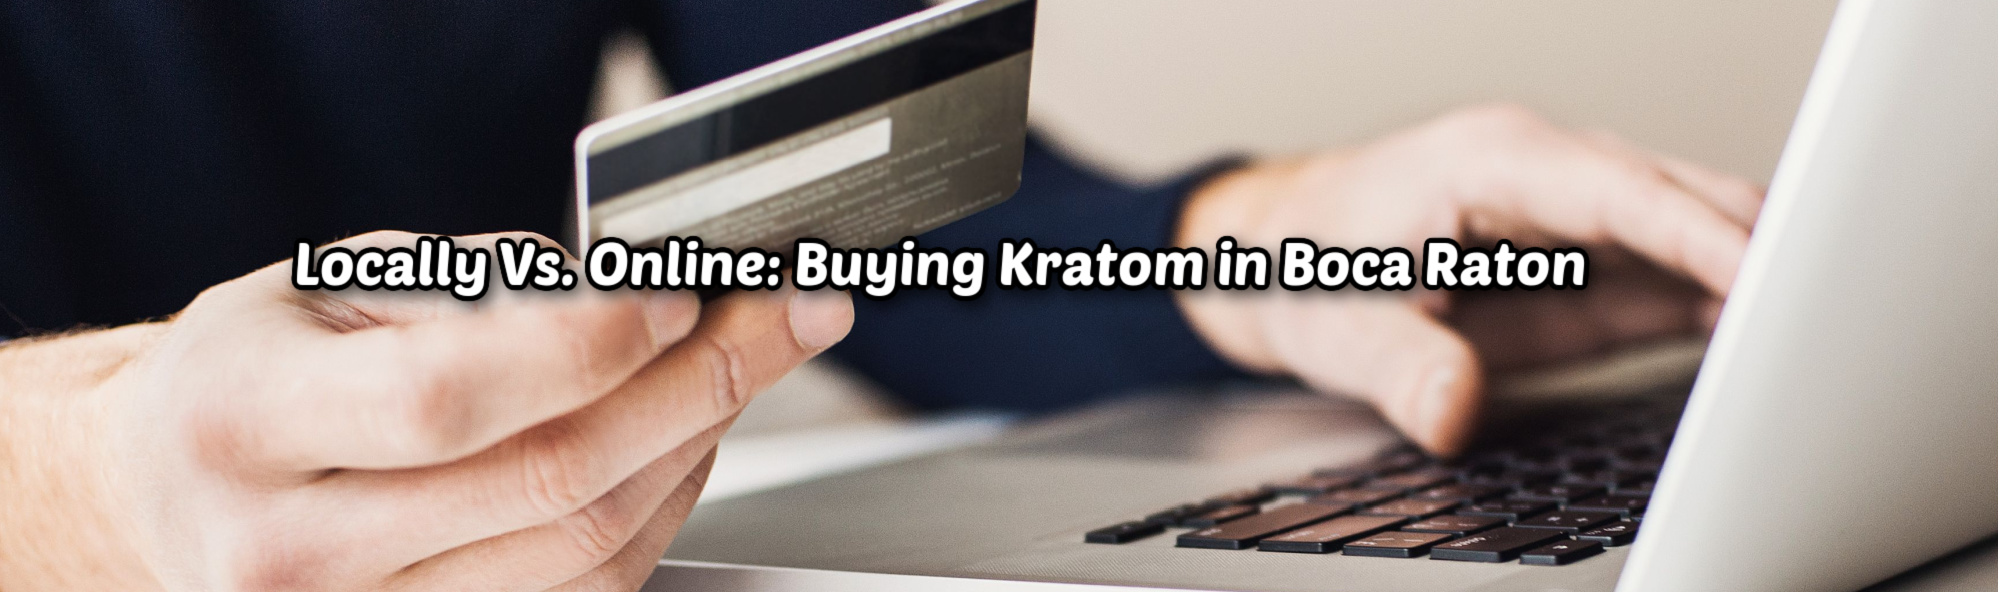 image of buying kratom in boca raton